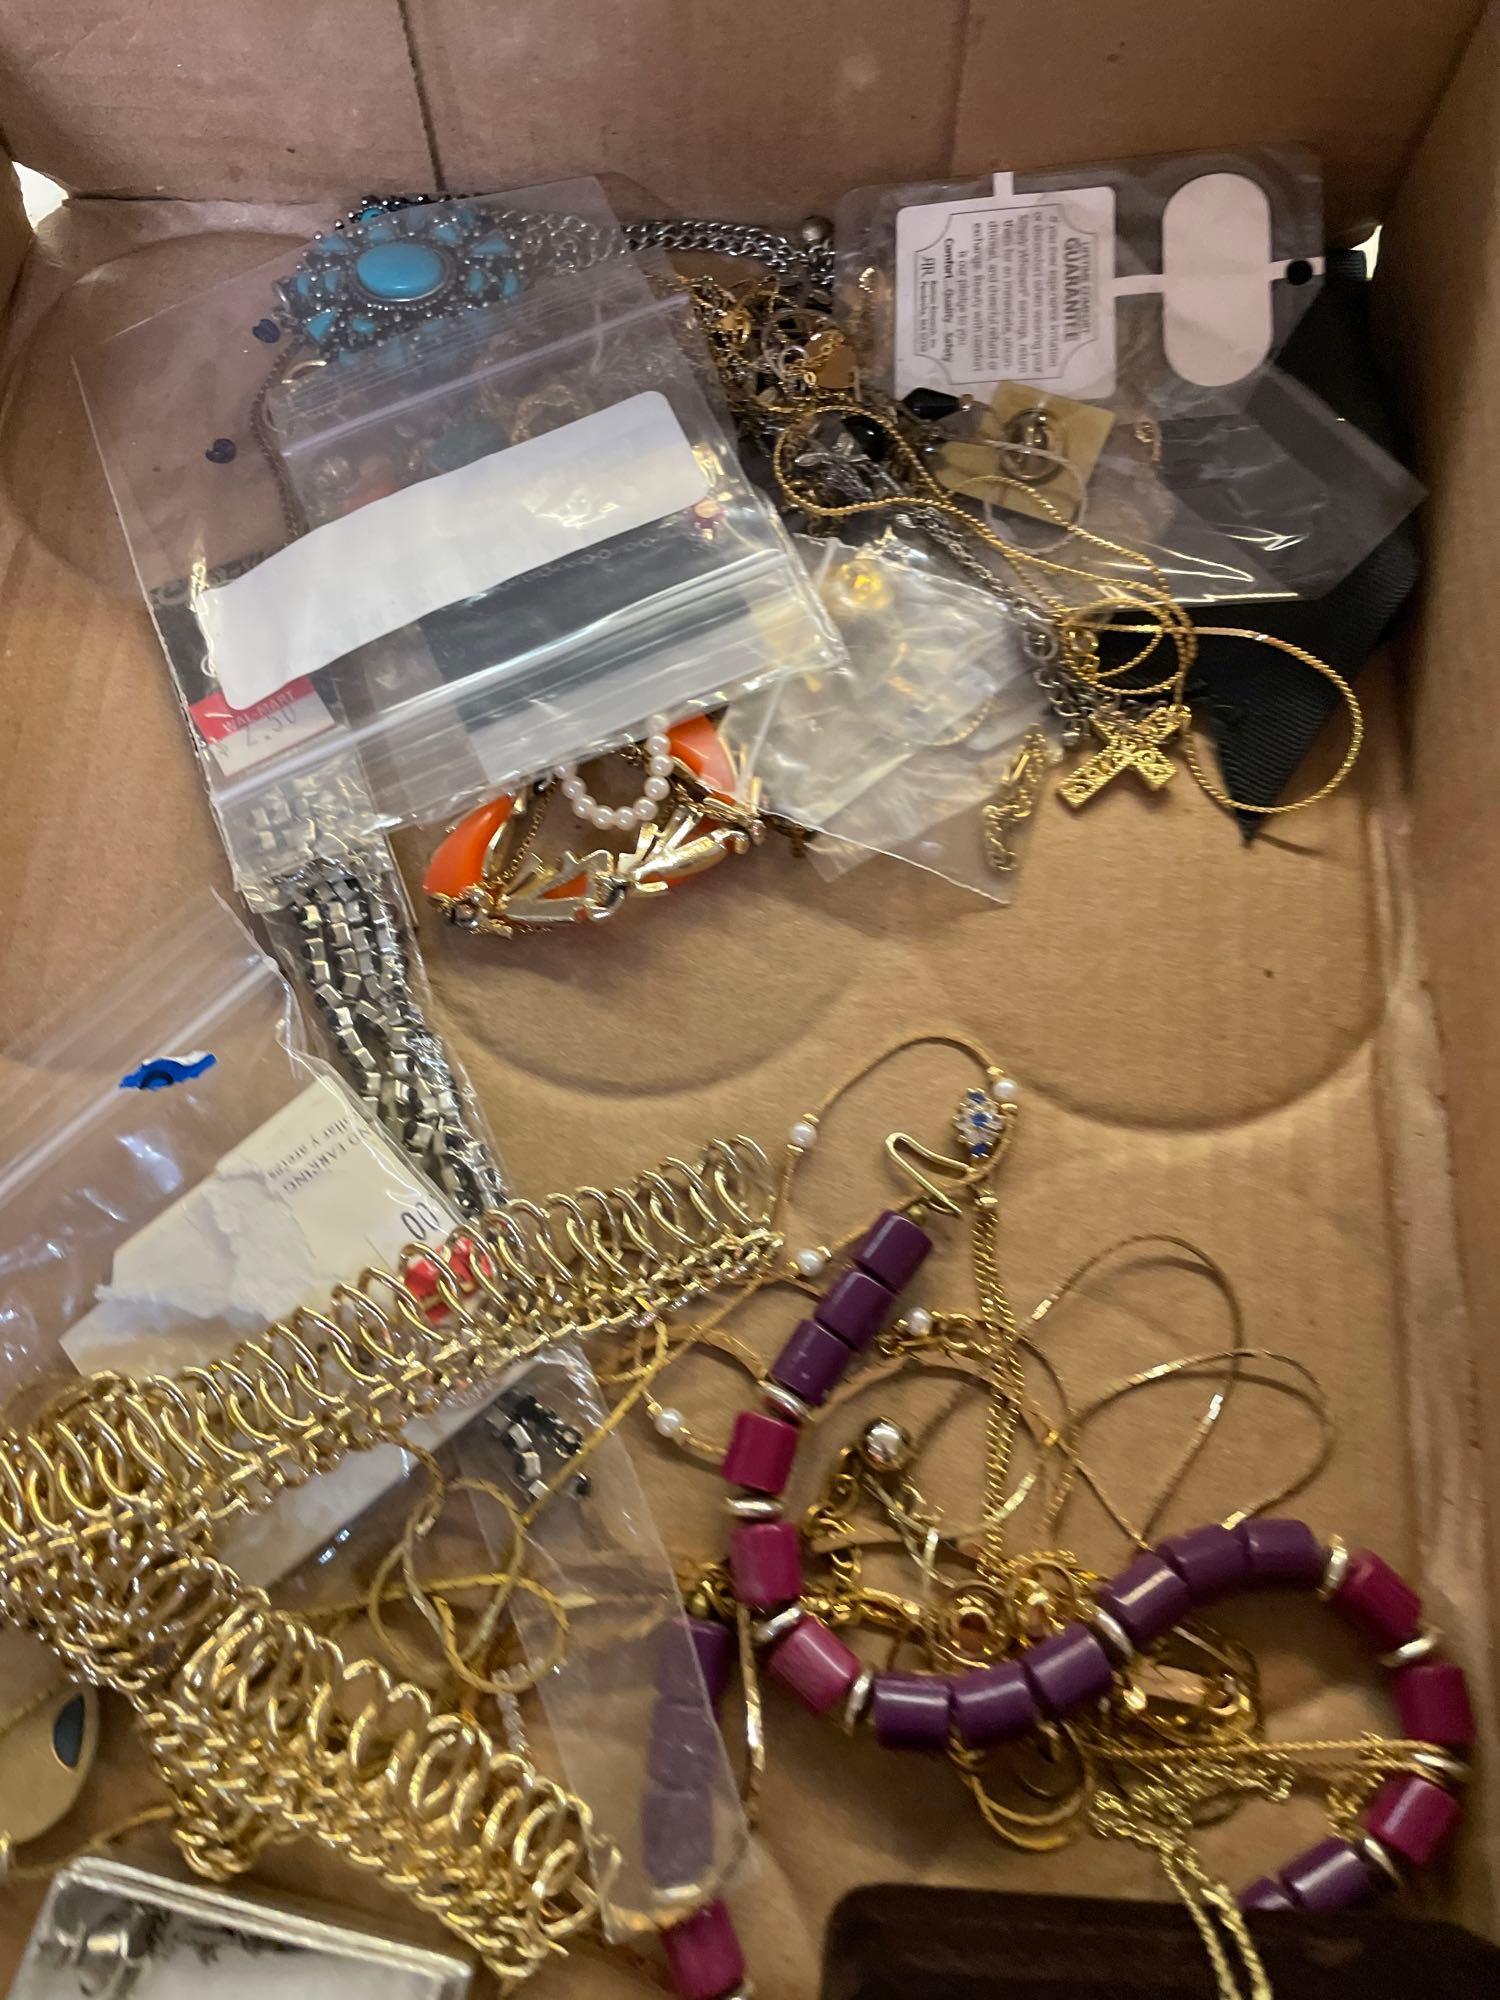 Walnut box in the jewelry box watches jewelry necklaces